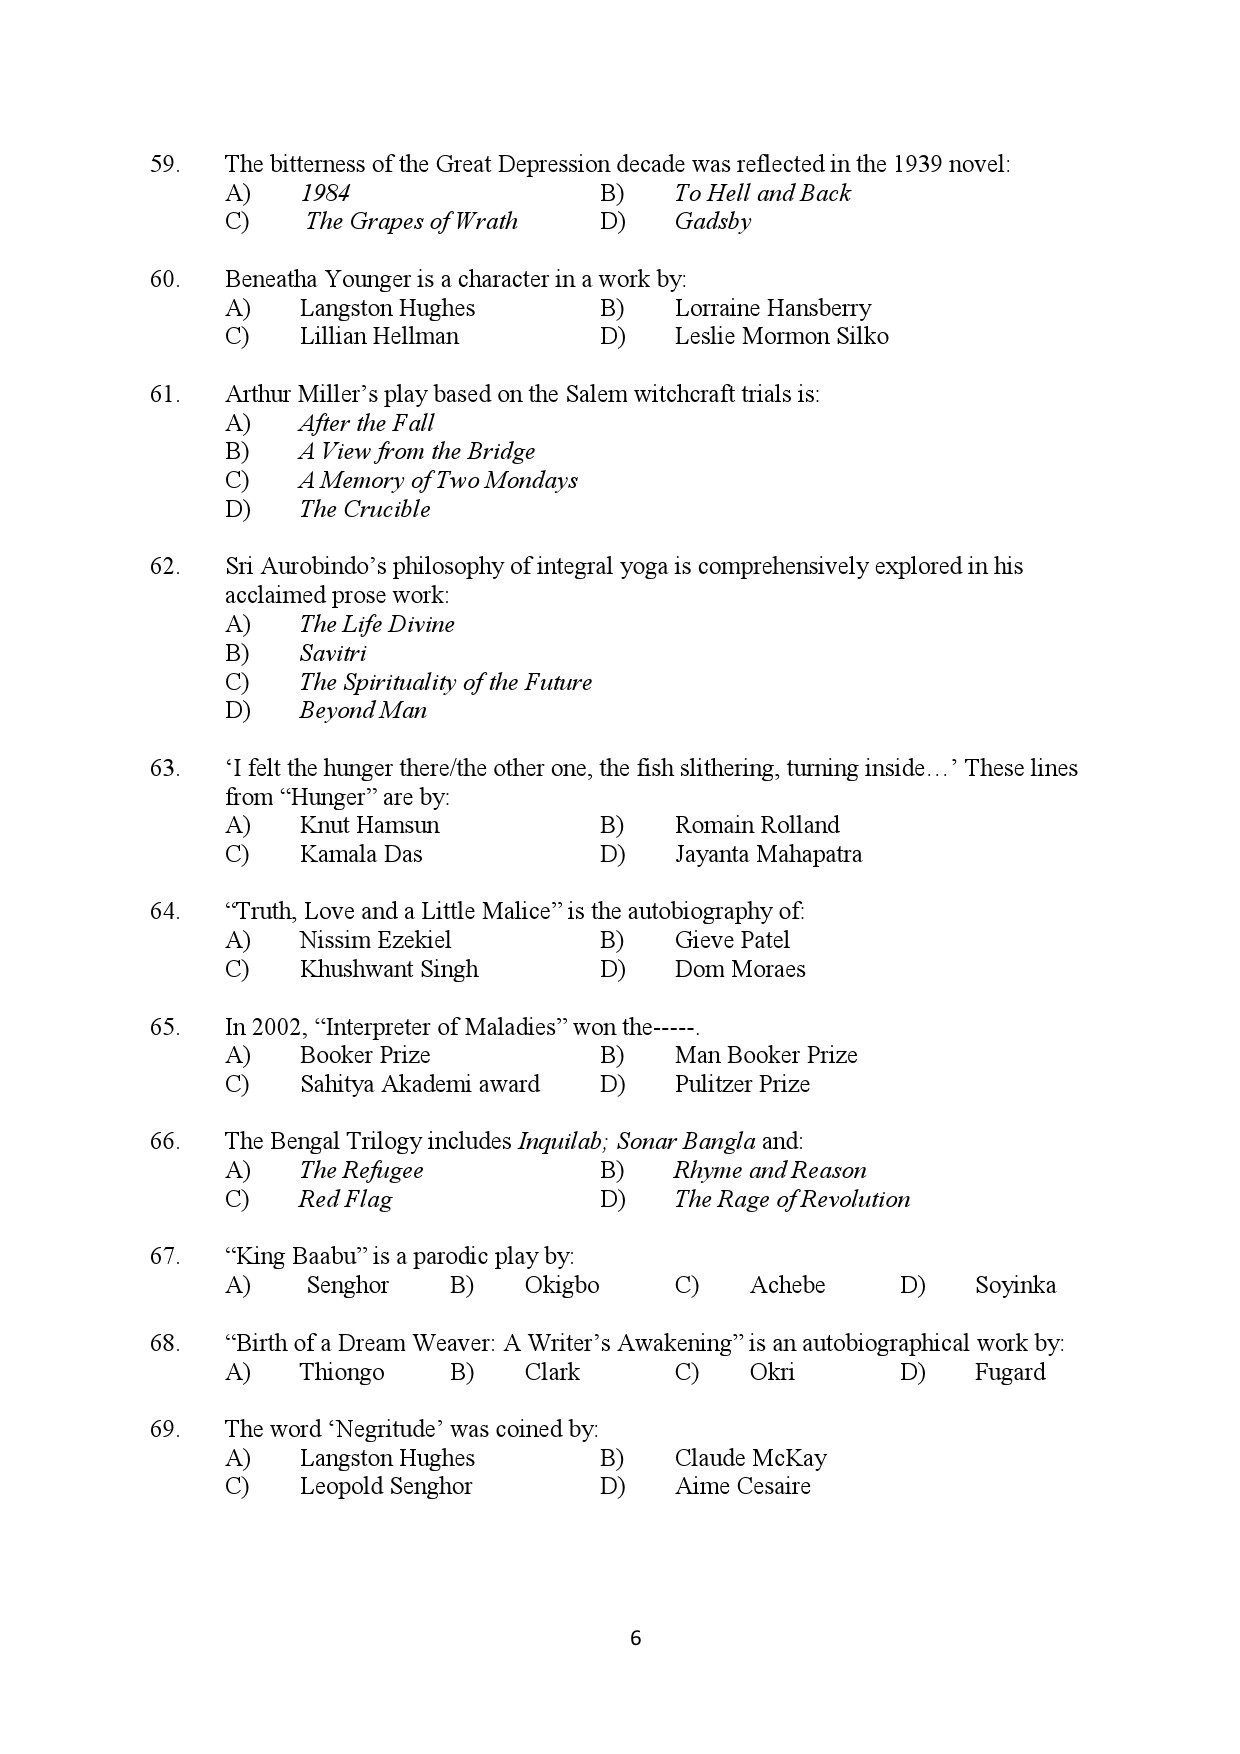 Kerala SET English Exam Question Paper February 2020 6